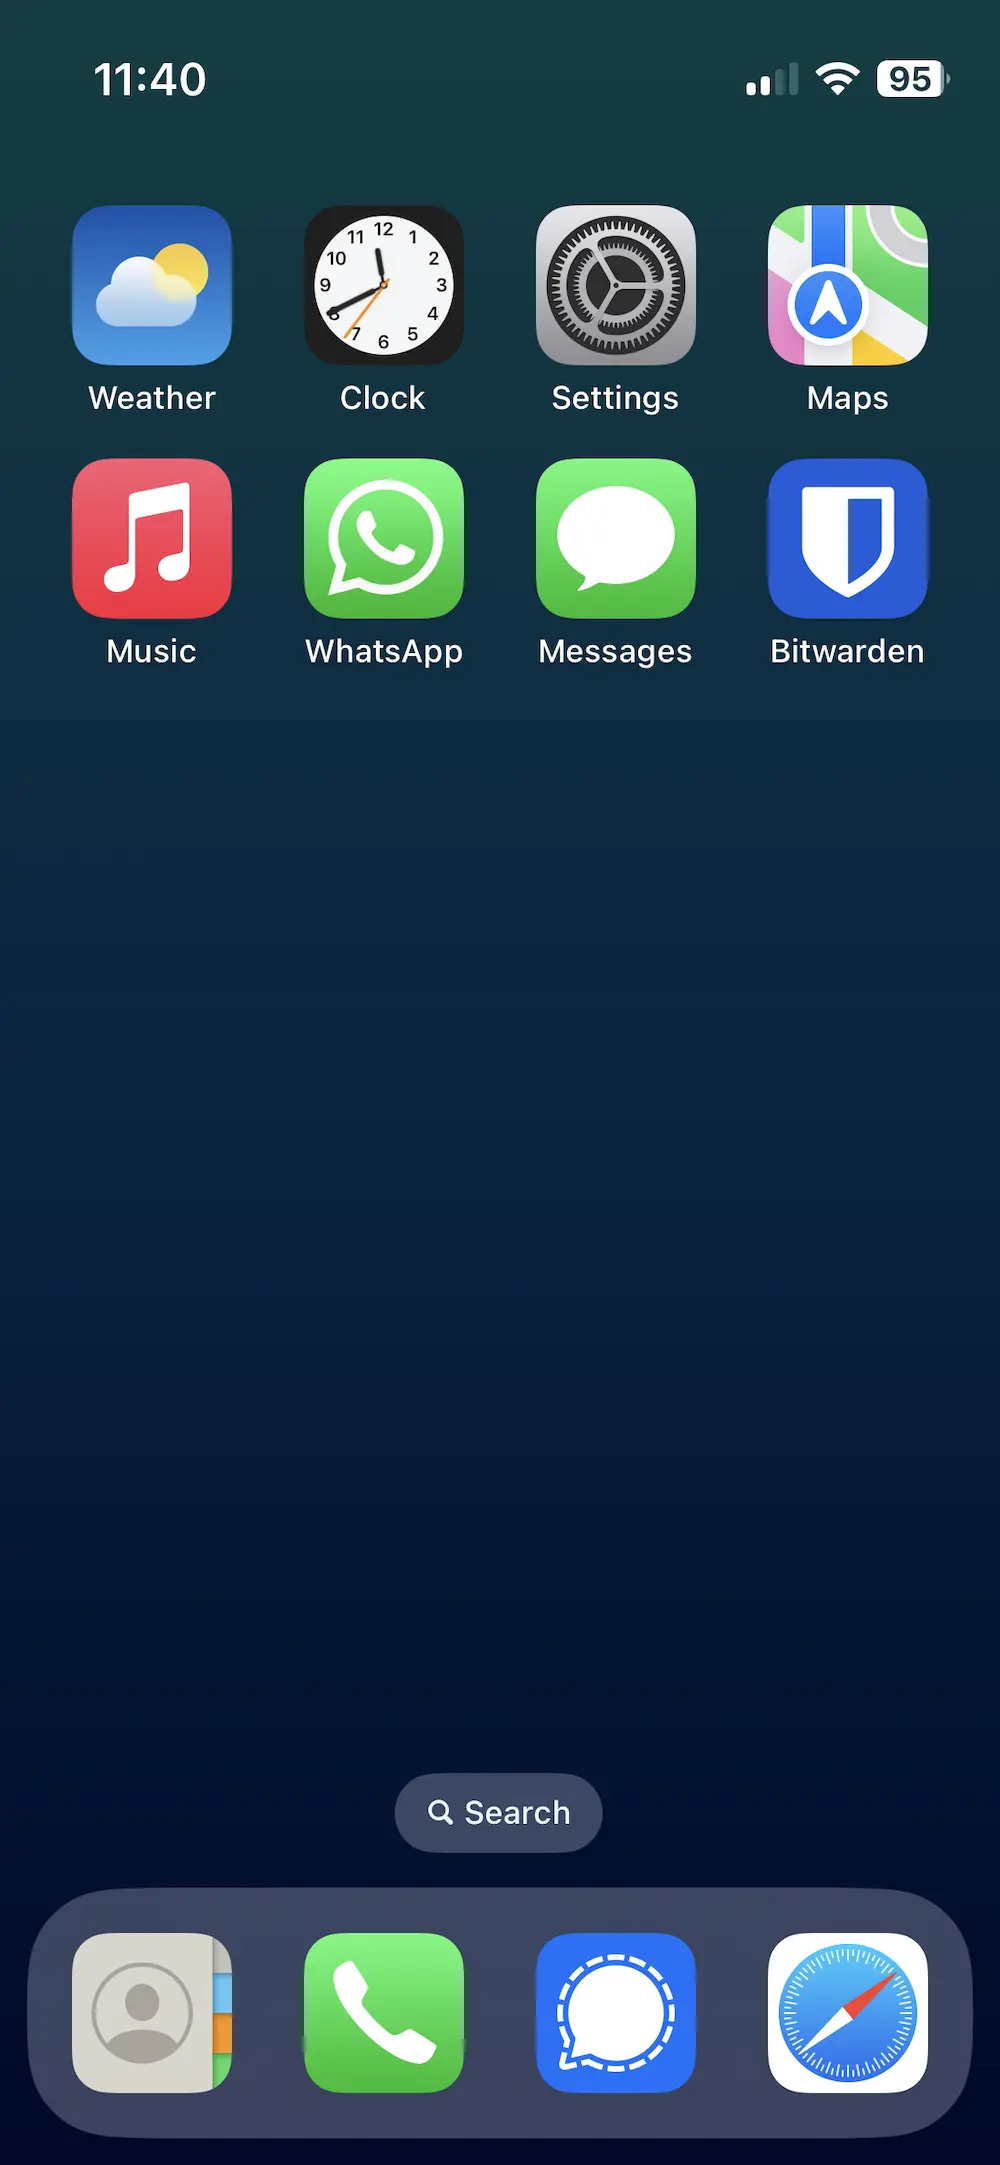 My phone's home screen